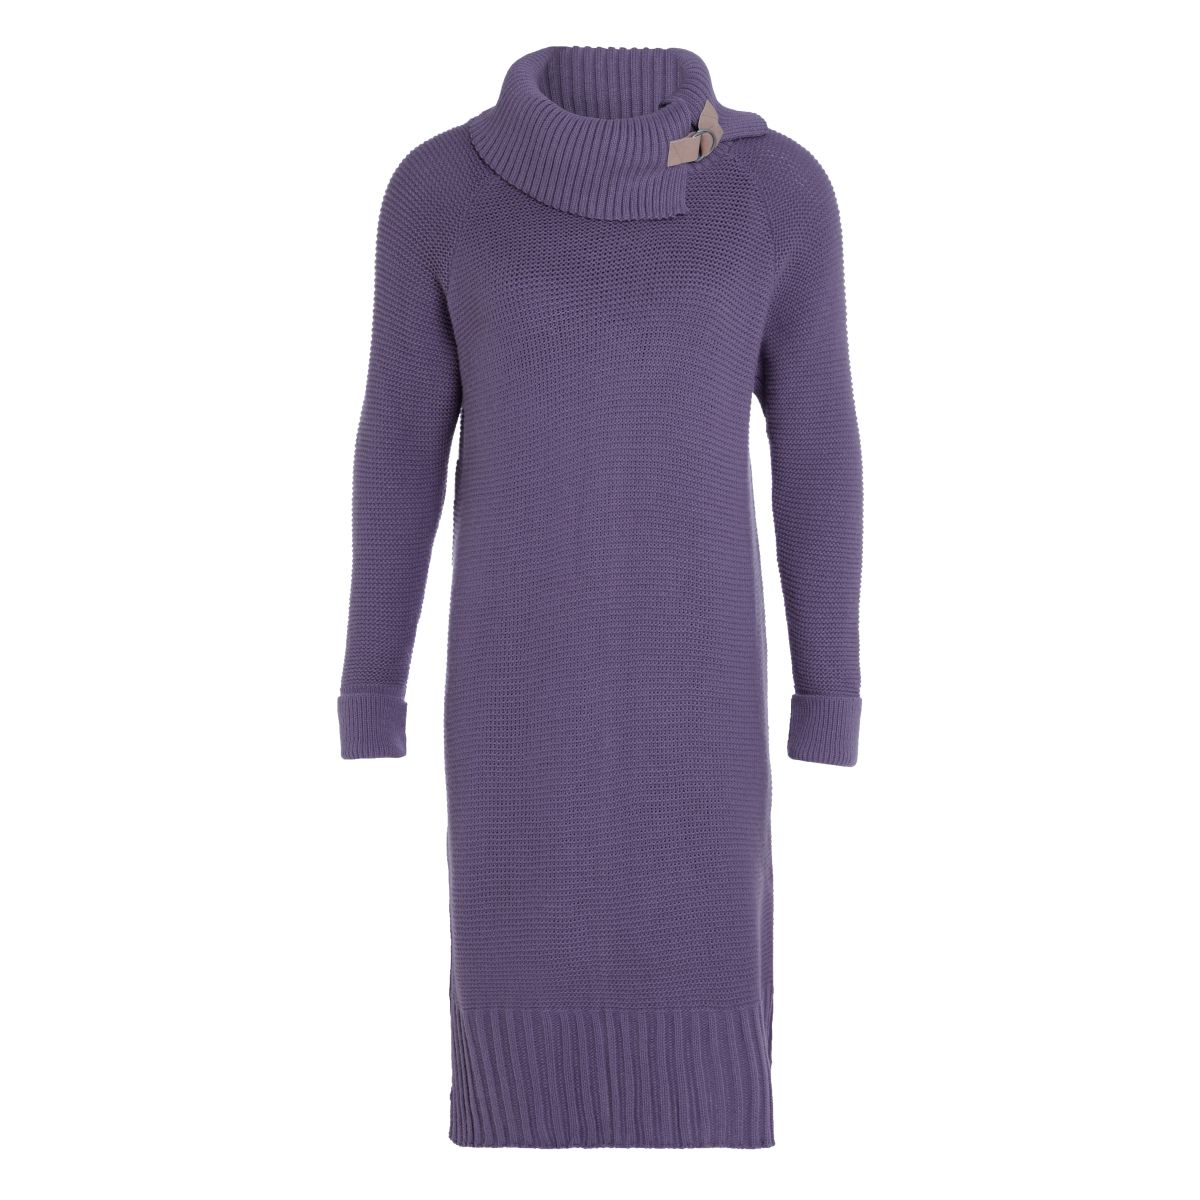 jamie knitted dress violet 3638